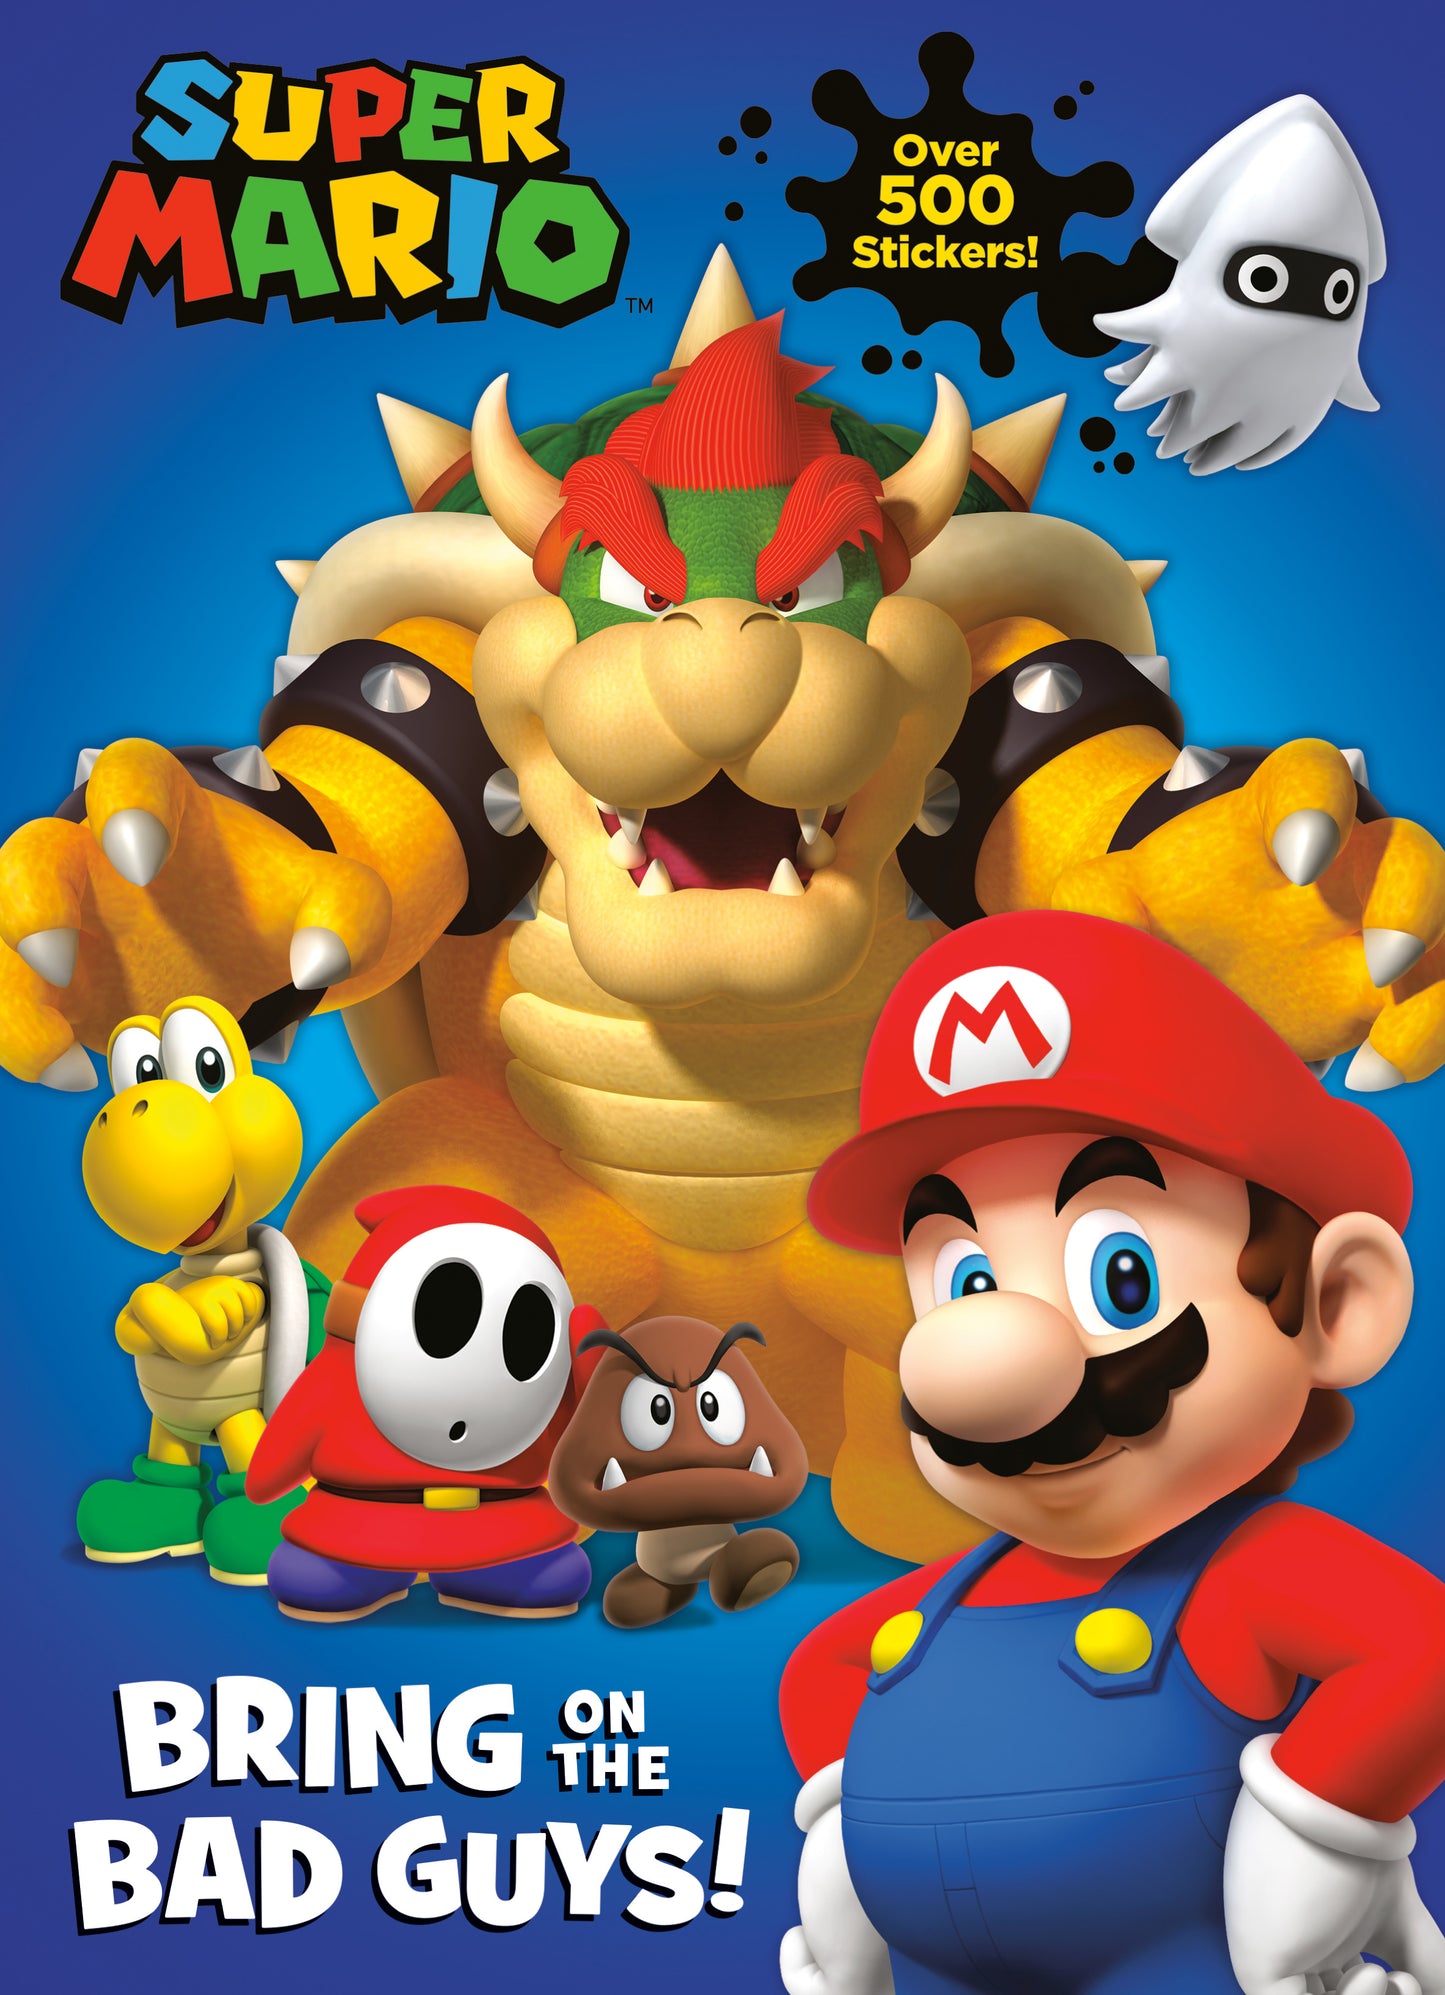 Super Mario: Bring on the Bad Guys! (Nintendo)